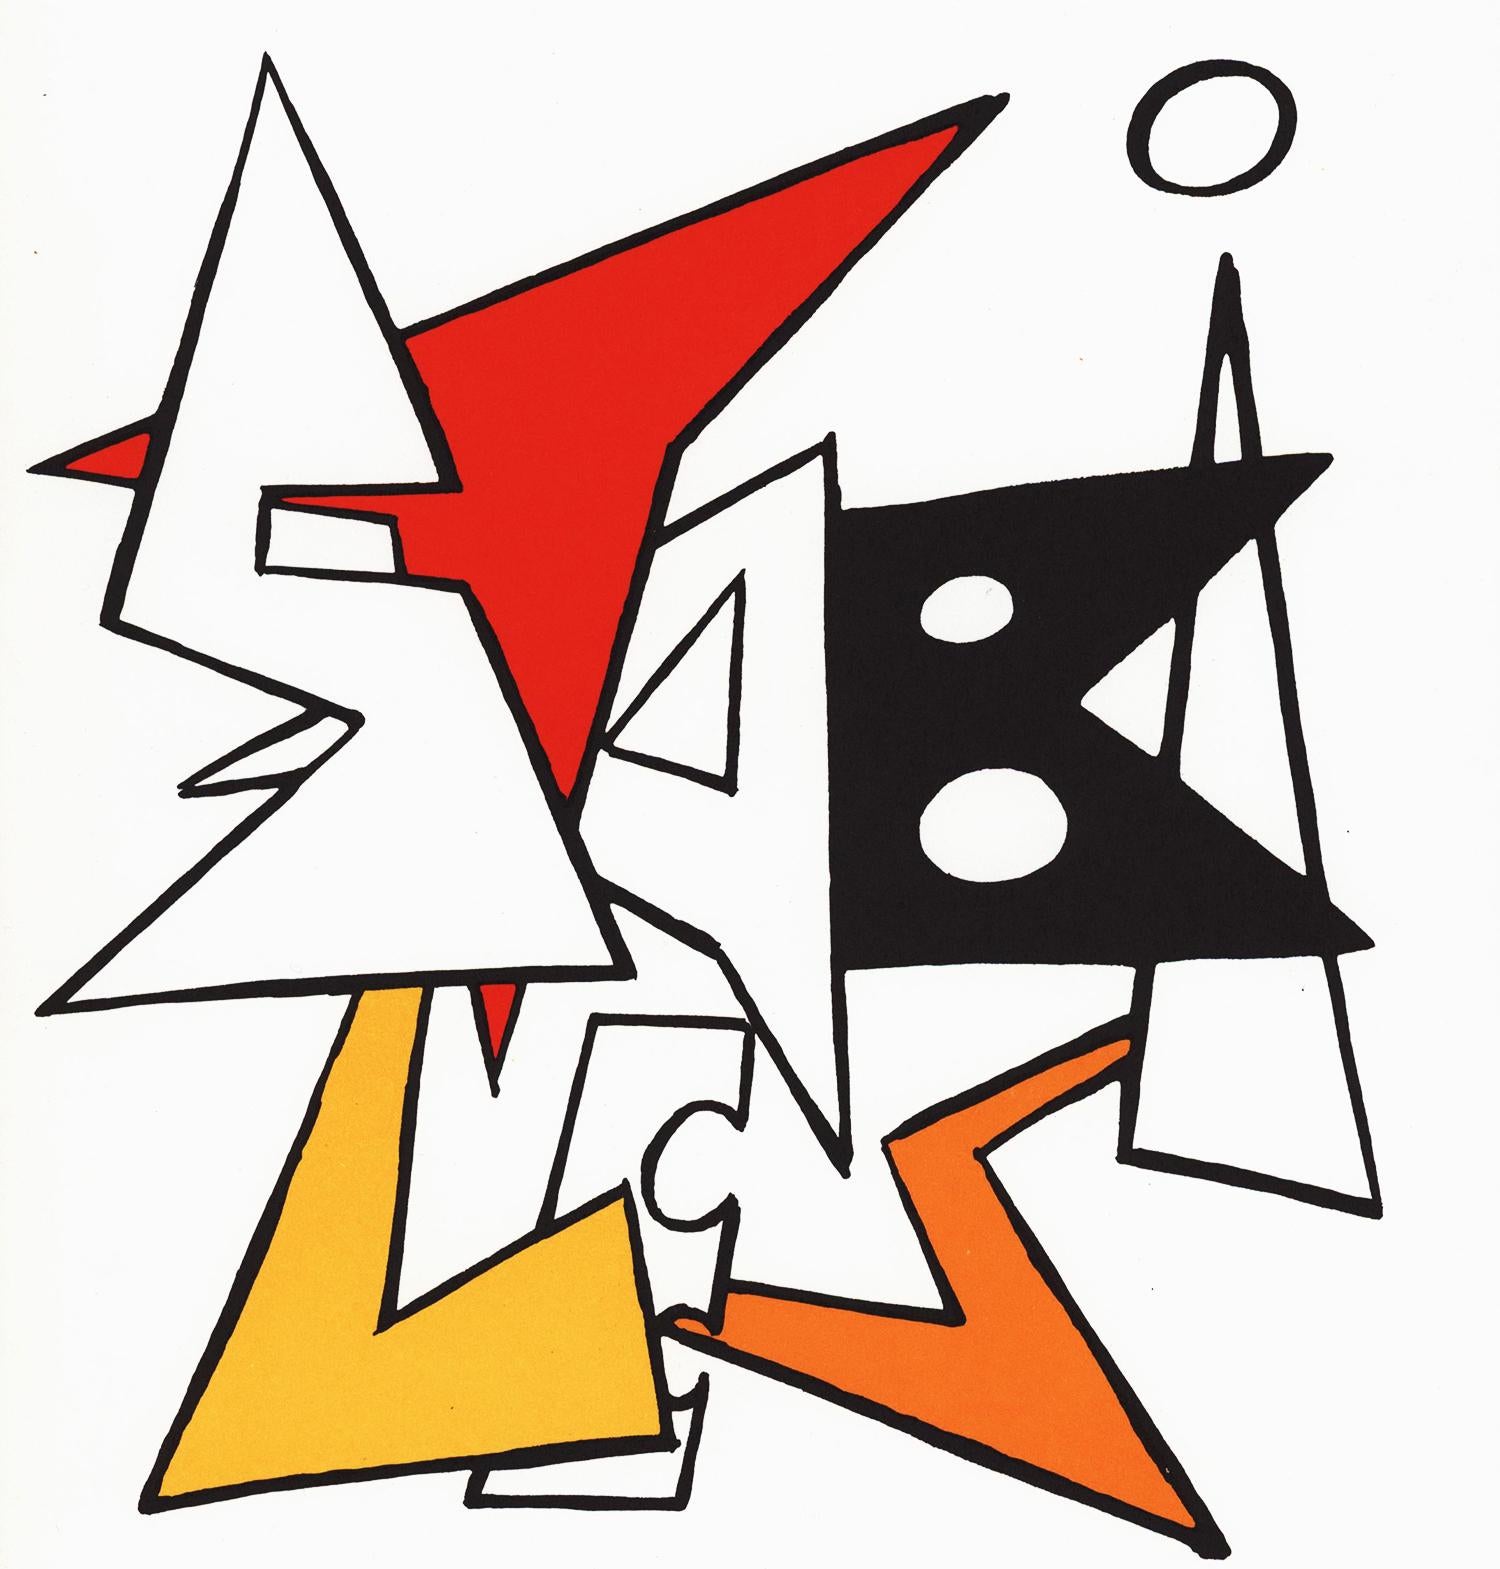 1960's Alexander Calder lithographic cover (from Derrière le miroir) - Contemporary Print by (after) Alexander Calder